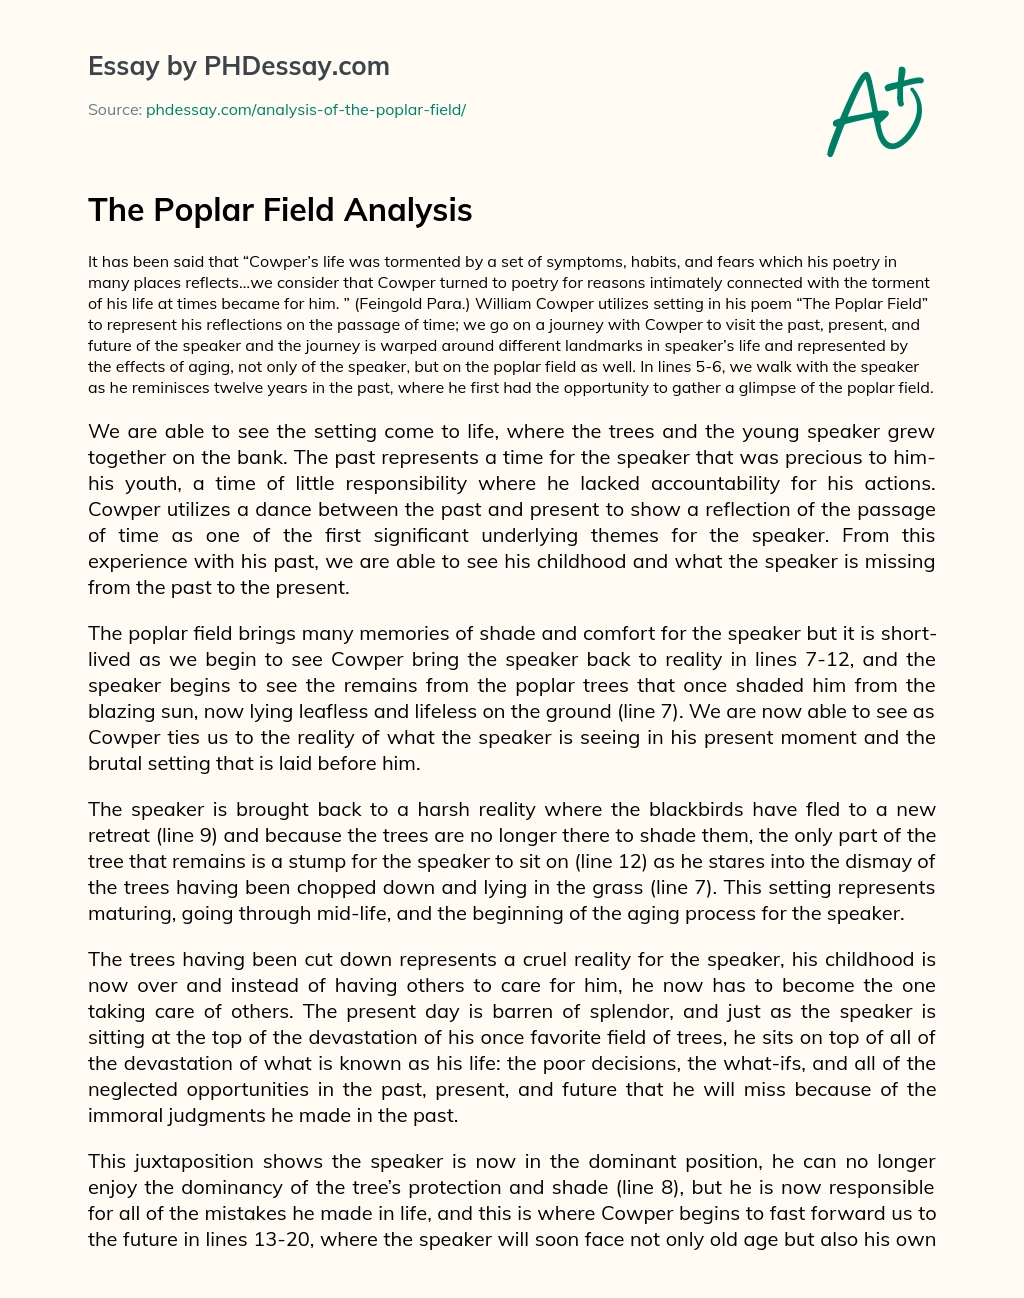 The Poplar Field Analysis essay